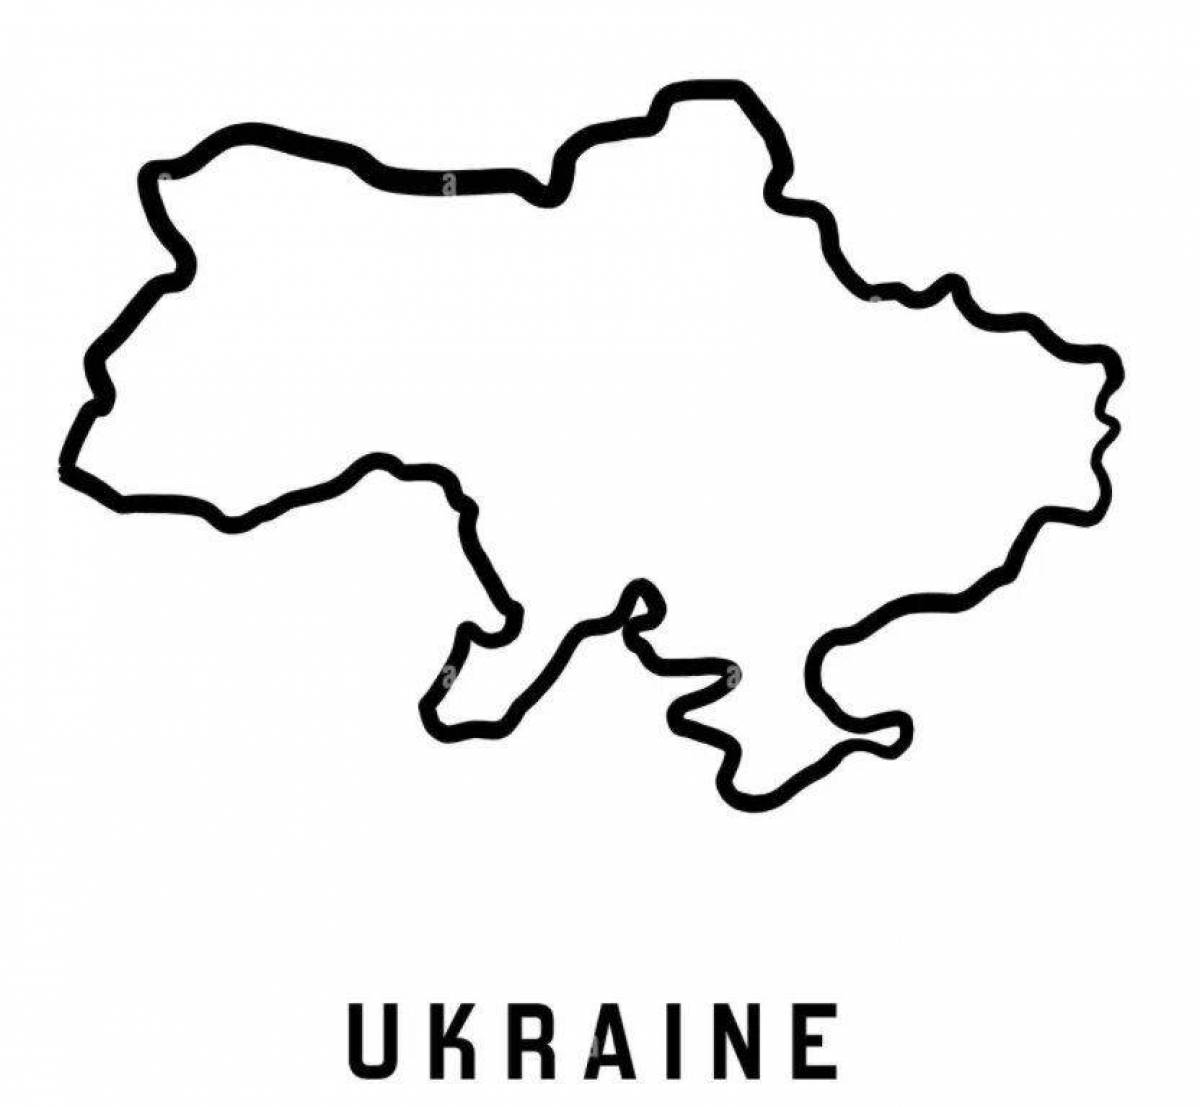 Впечатляющая карта украины